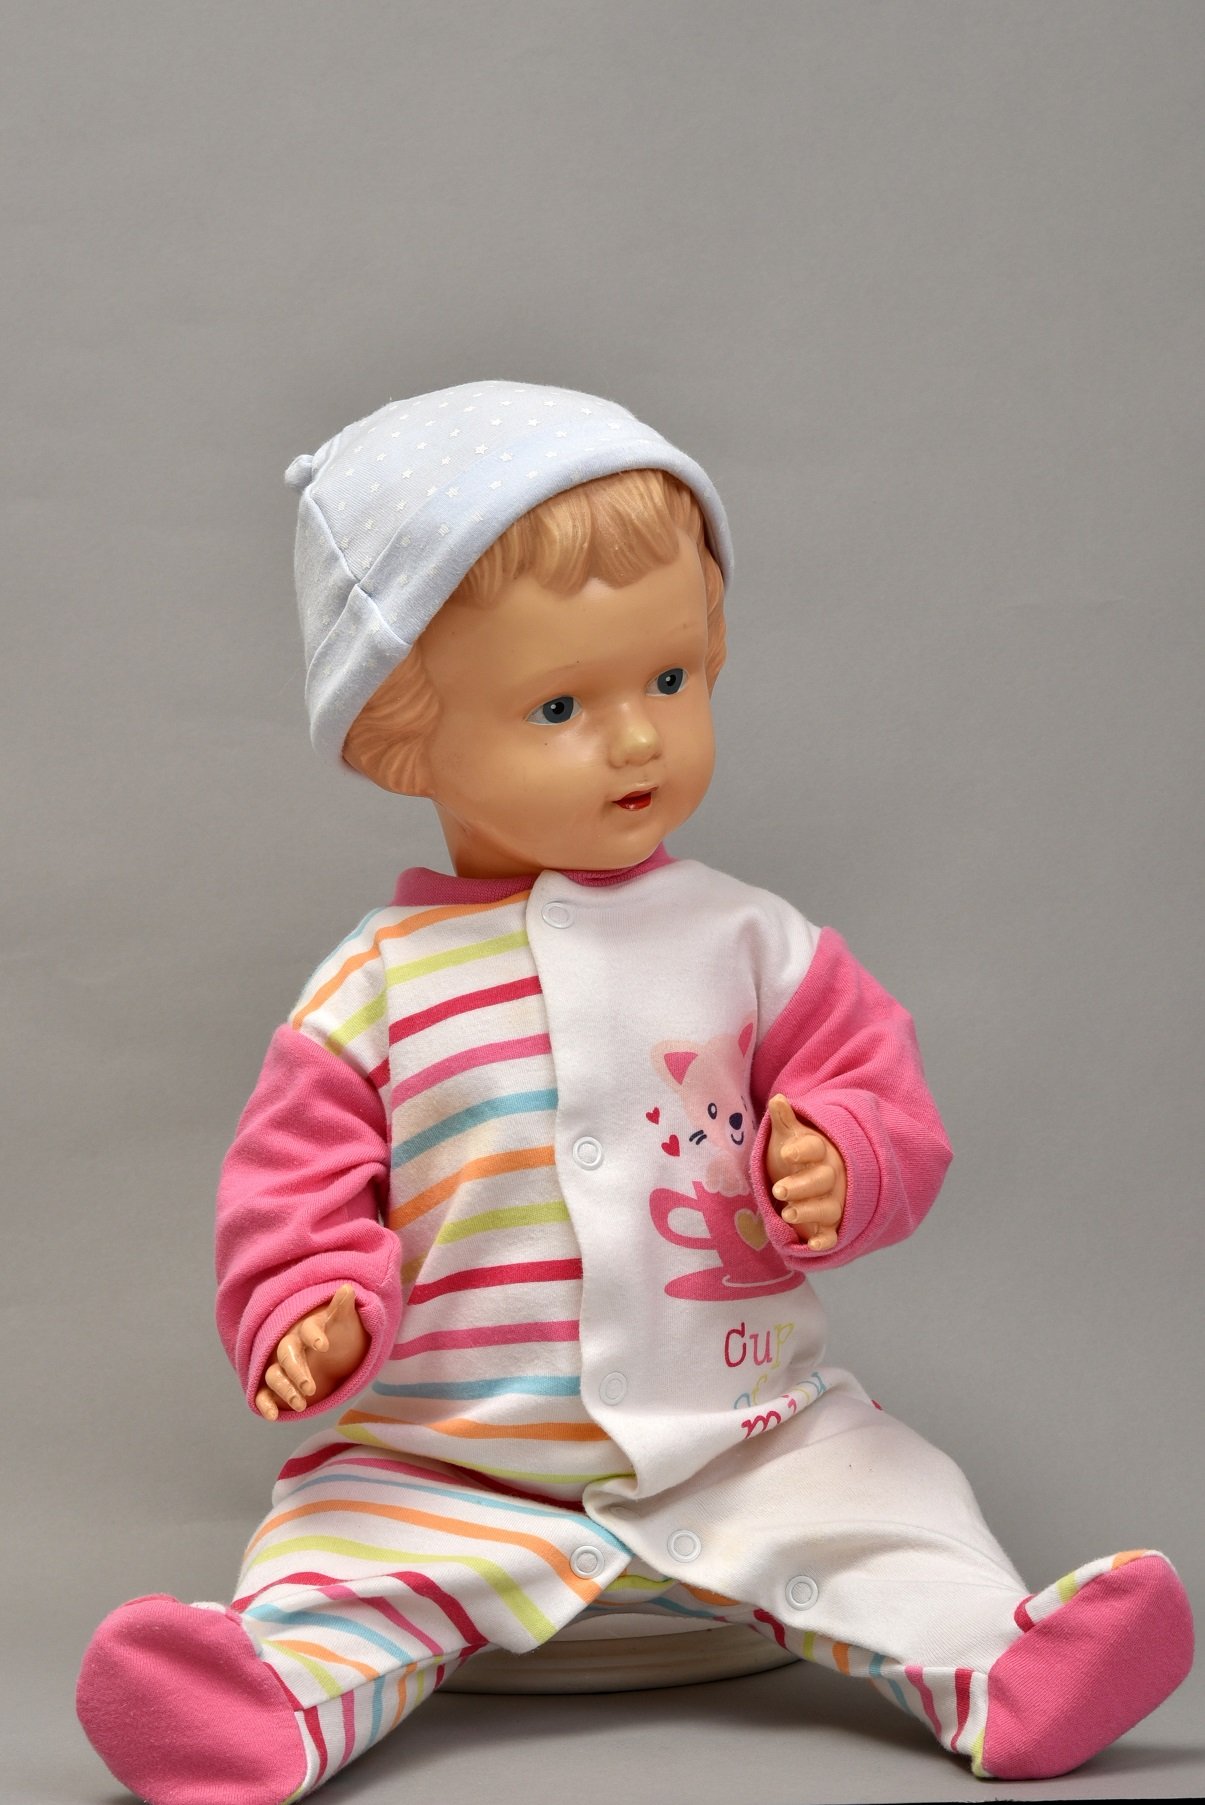 Baba gyermekruhában (Óbudai Múzeum CC BY-NC-SA)